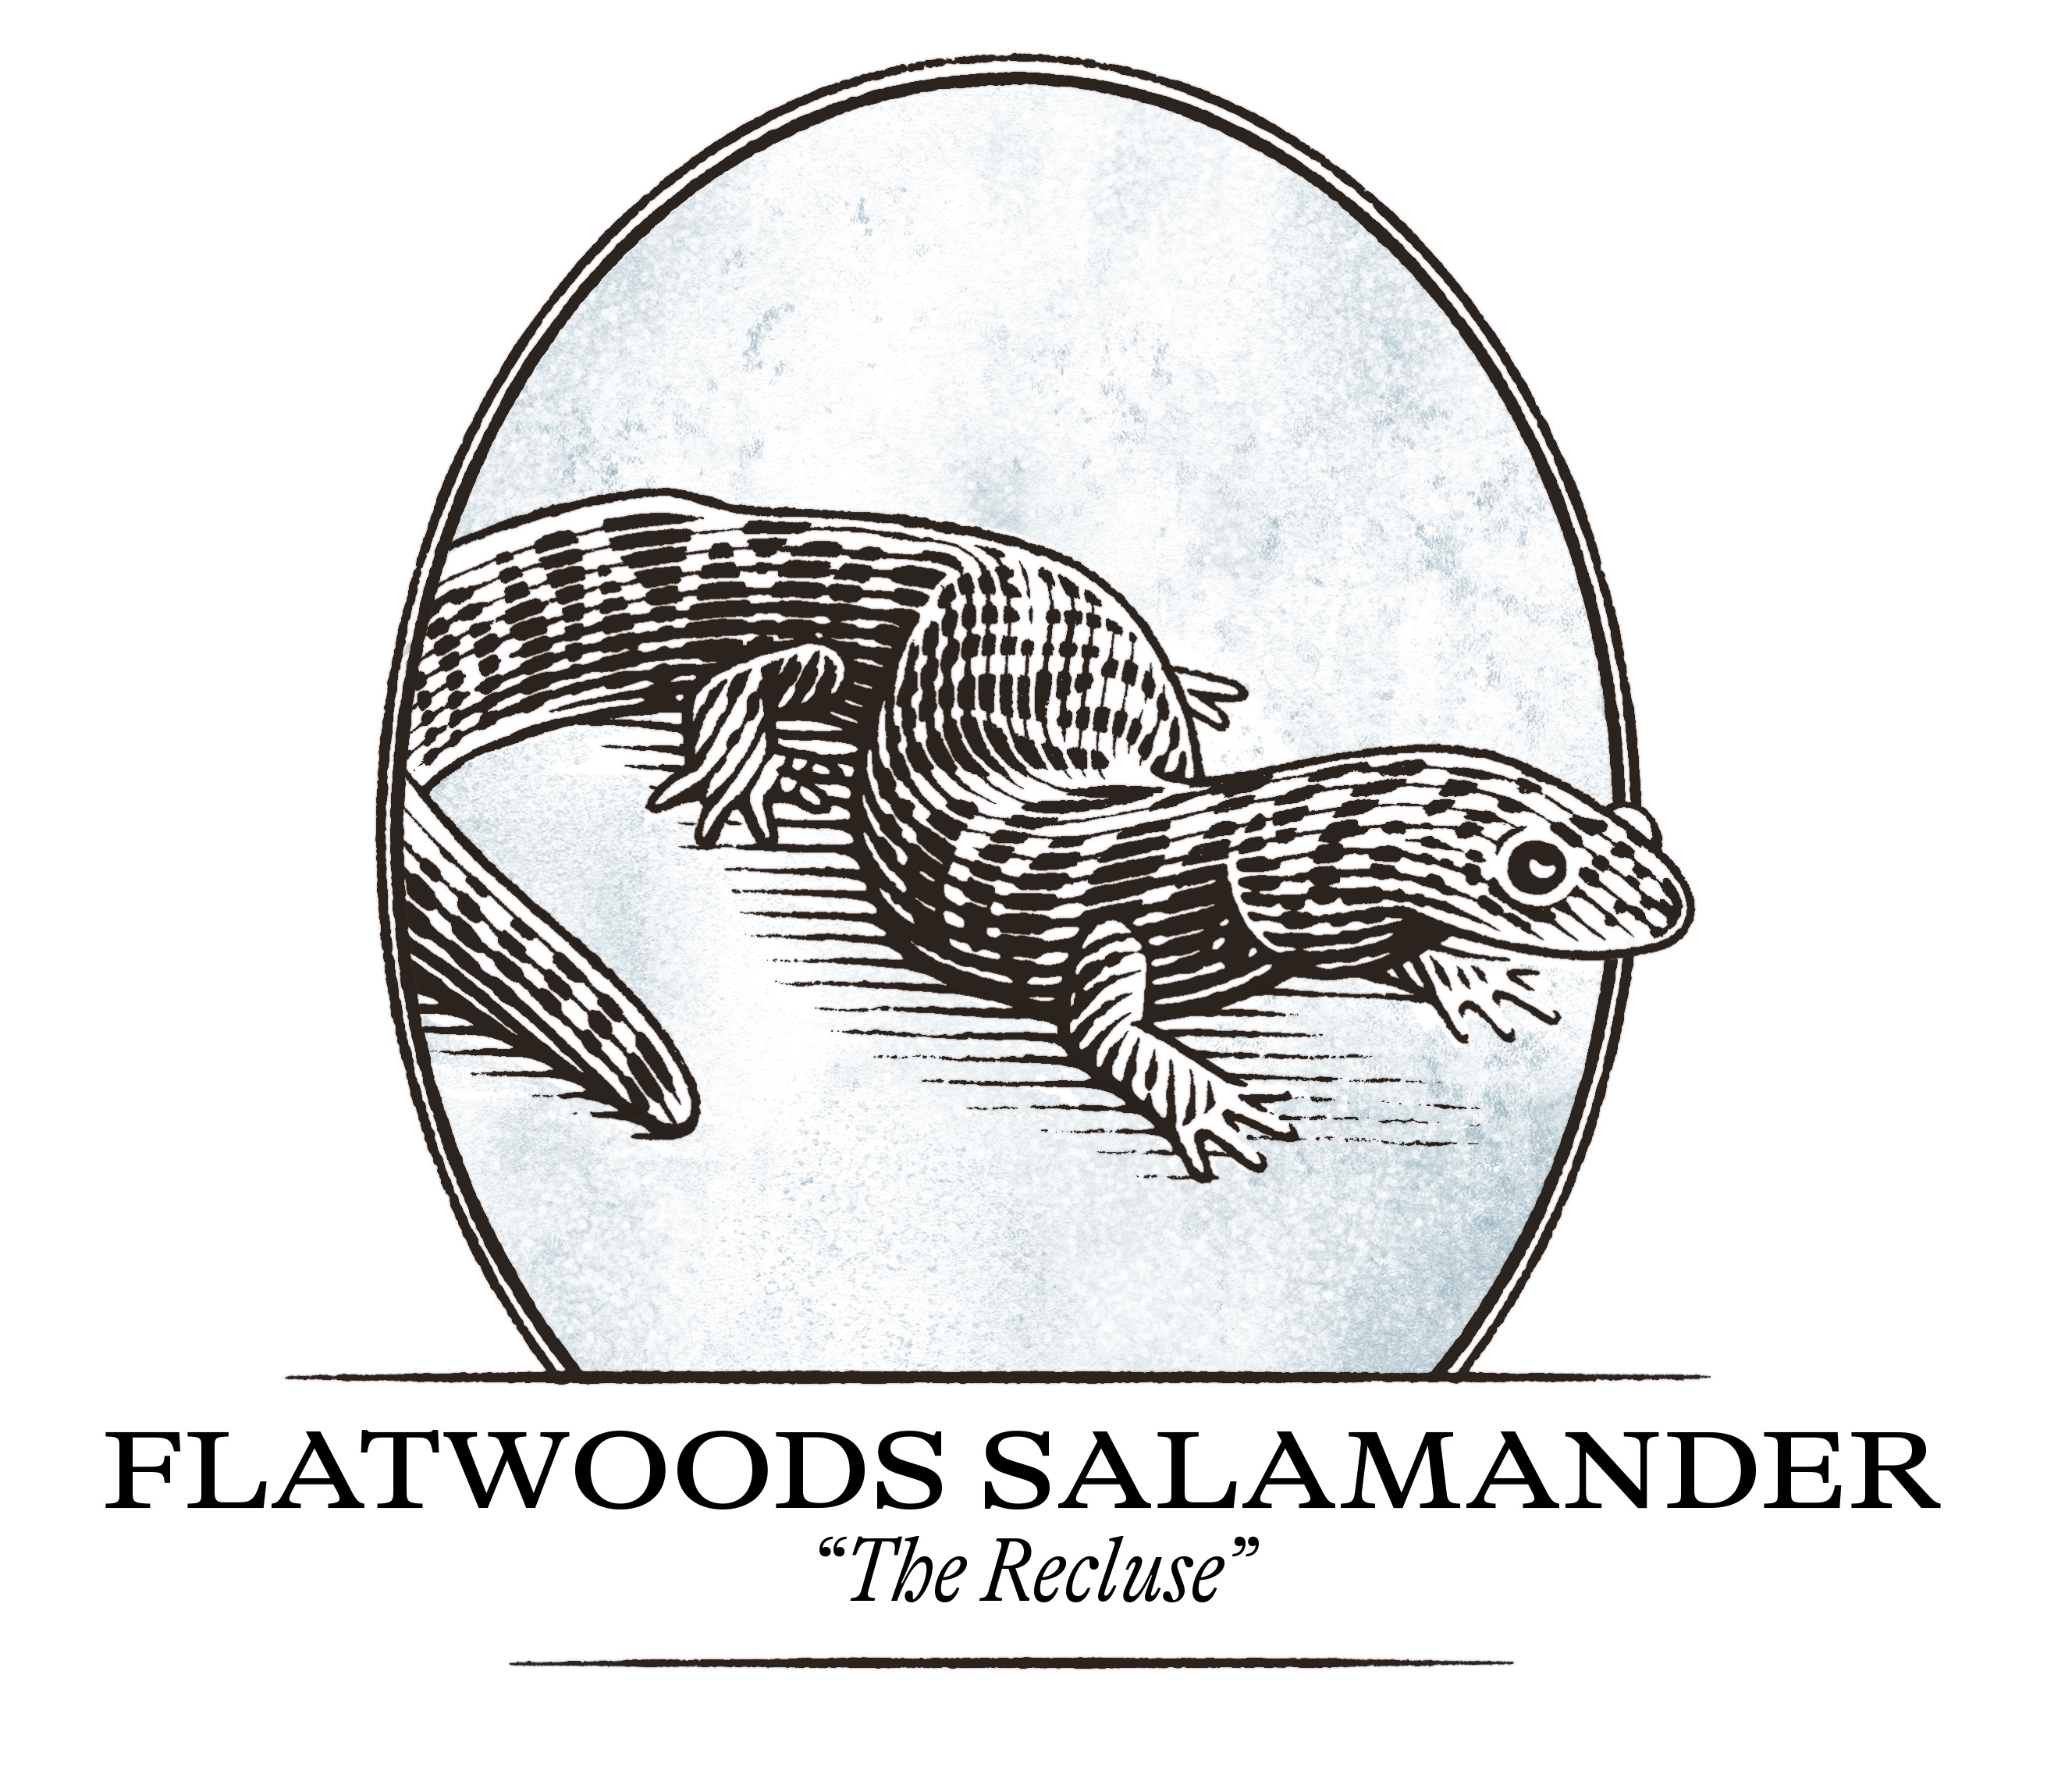 Flatwoods salamander illustration